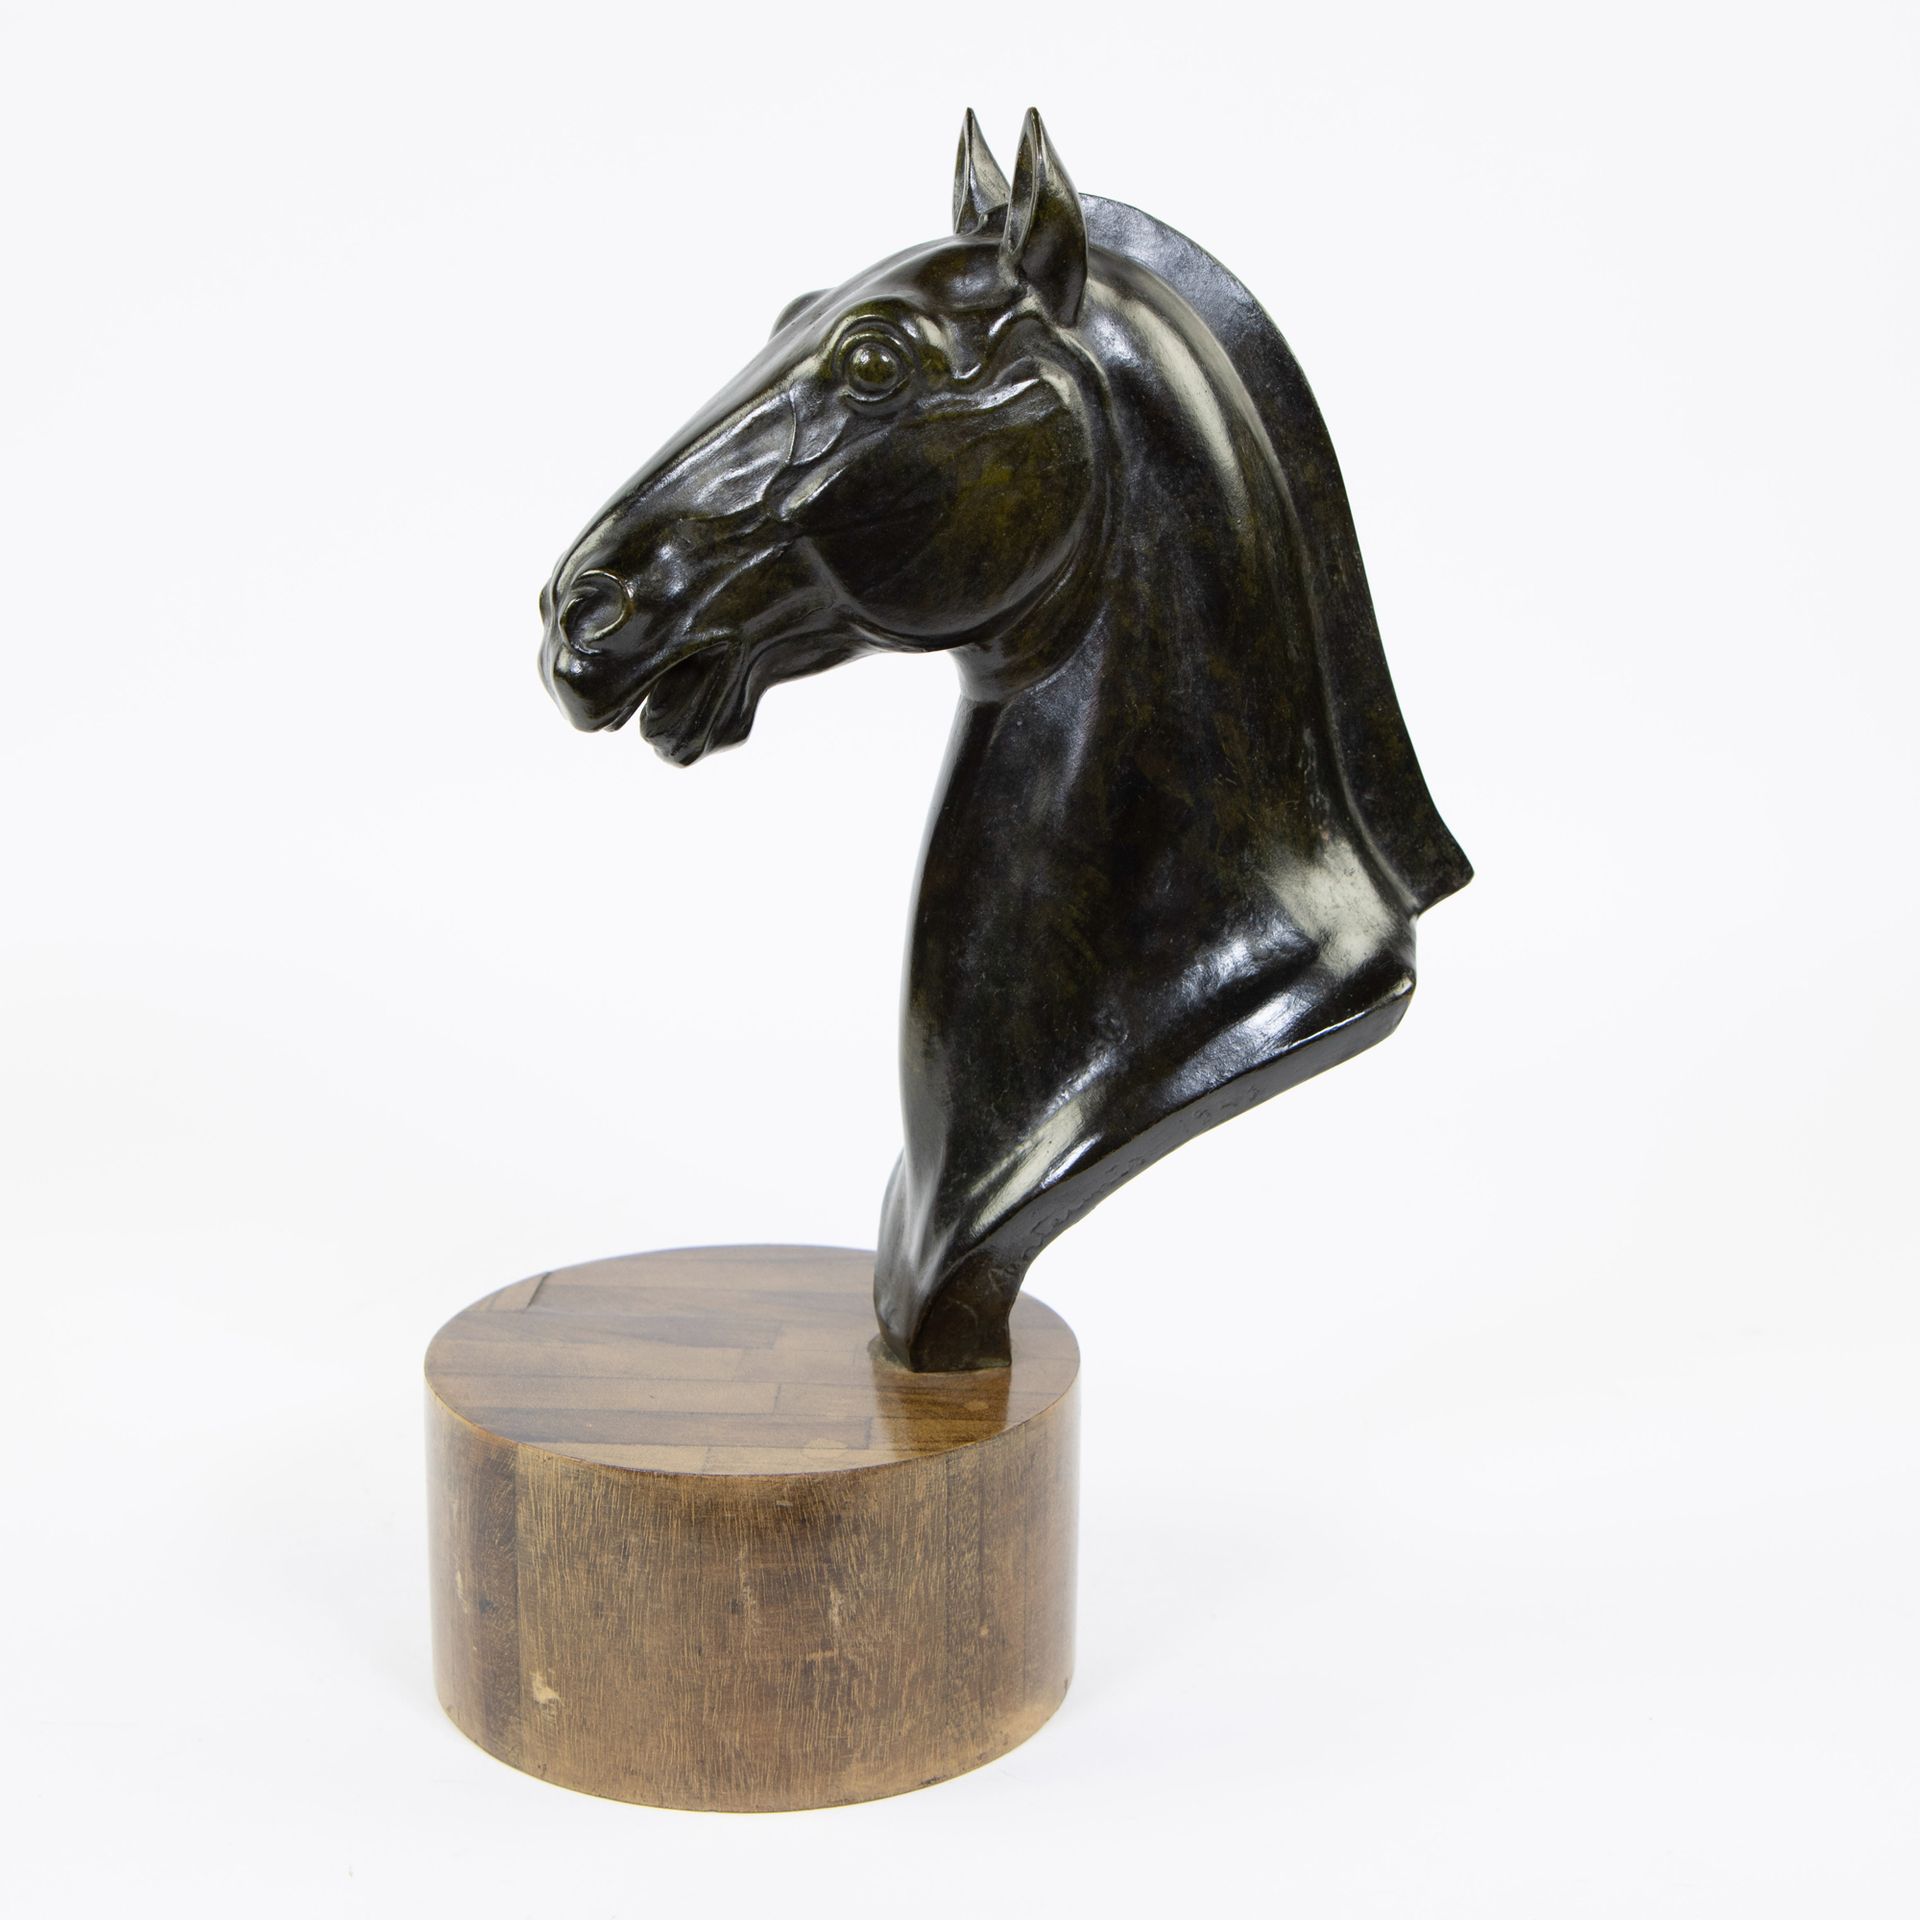 Jan ANTEUNIS (1896-1973) Jan ANTEUNIS (1896-1973)
Bronze sculpture of a horse's &hellip;